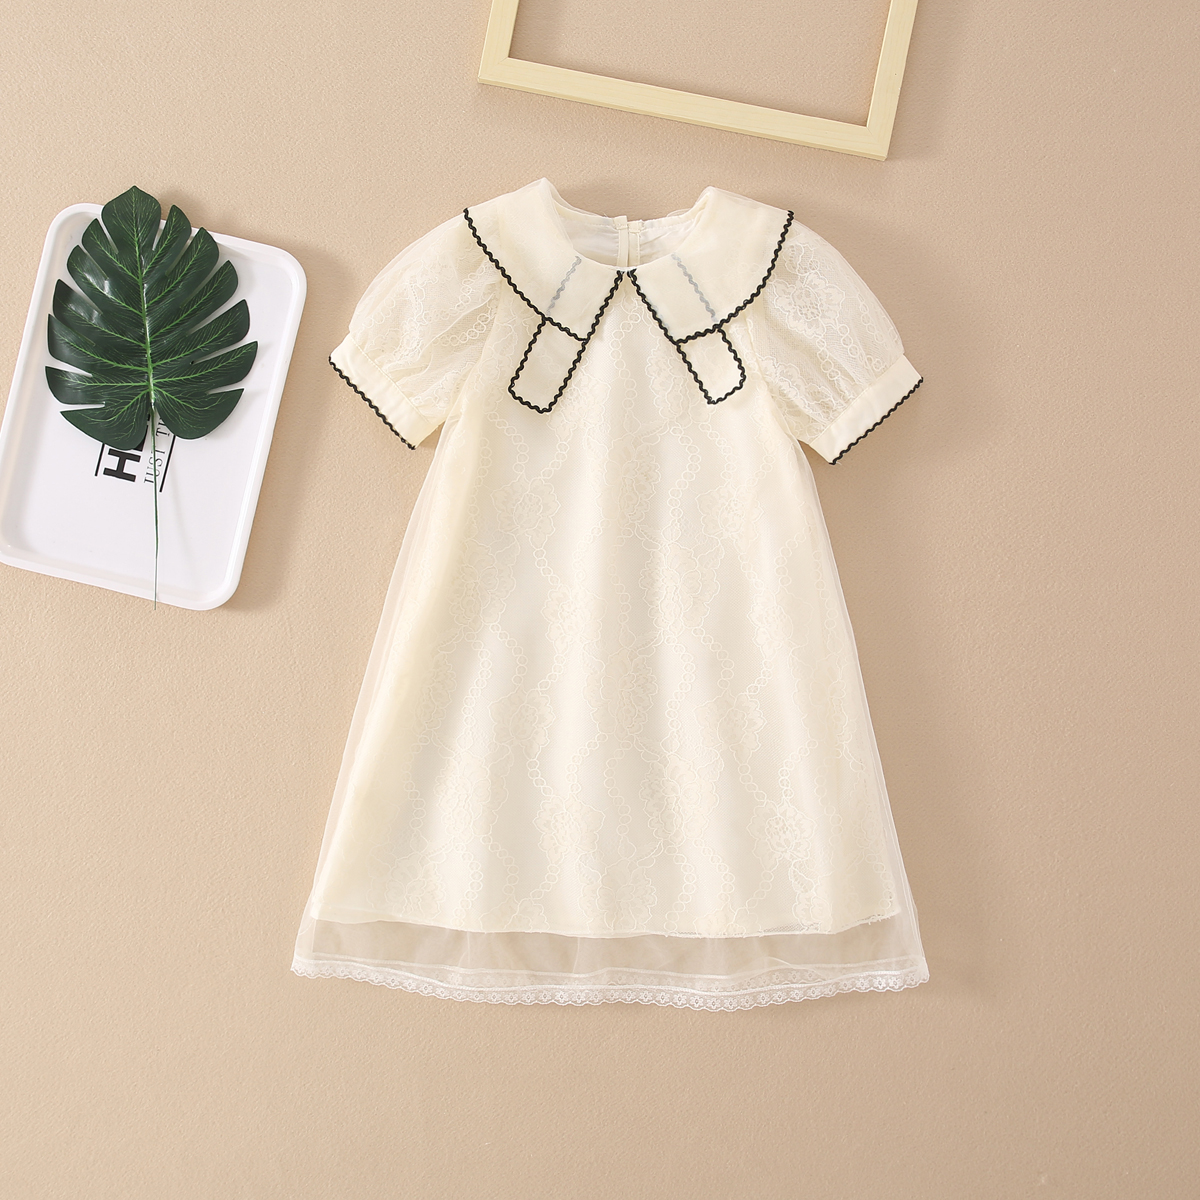 macy's cheap discount kids girls formal cute dresses for girls white A shape mesh dress